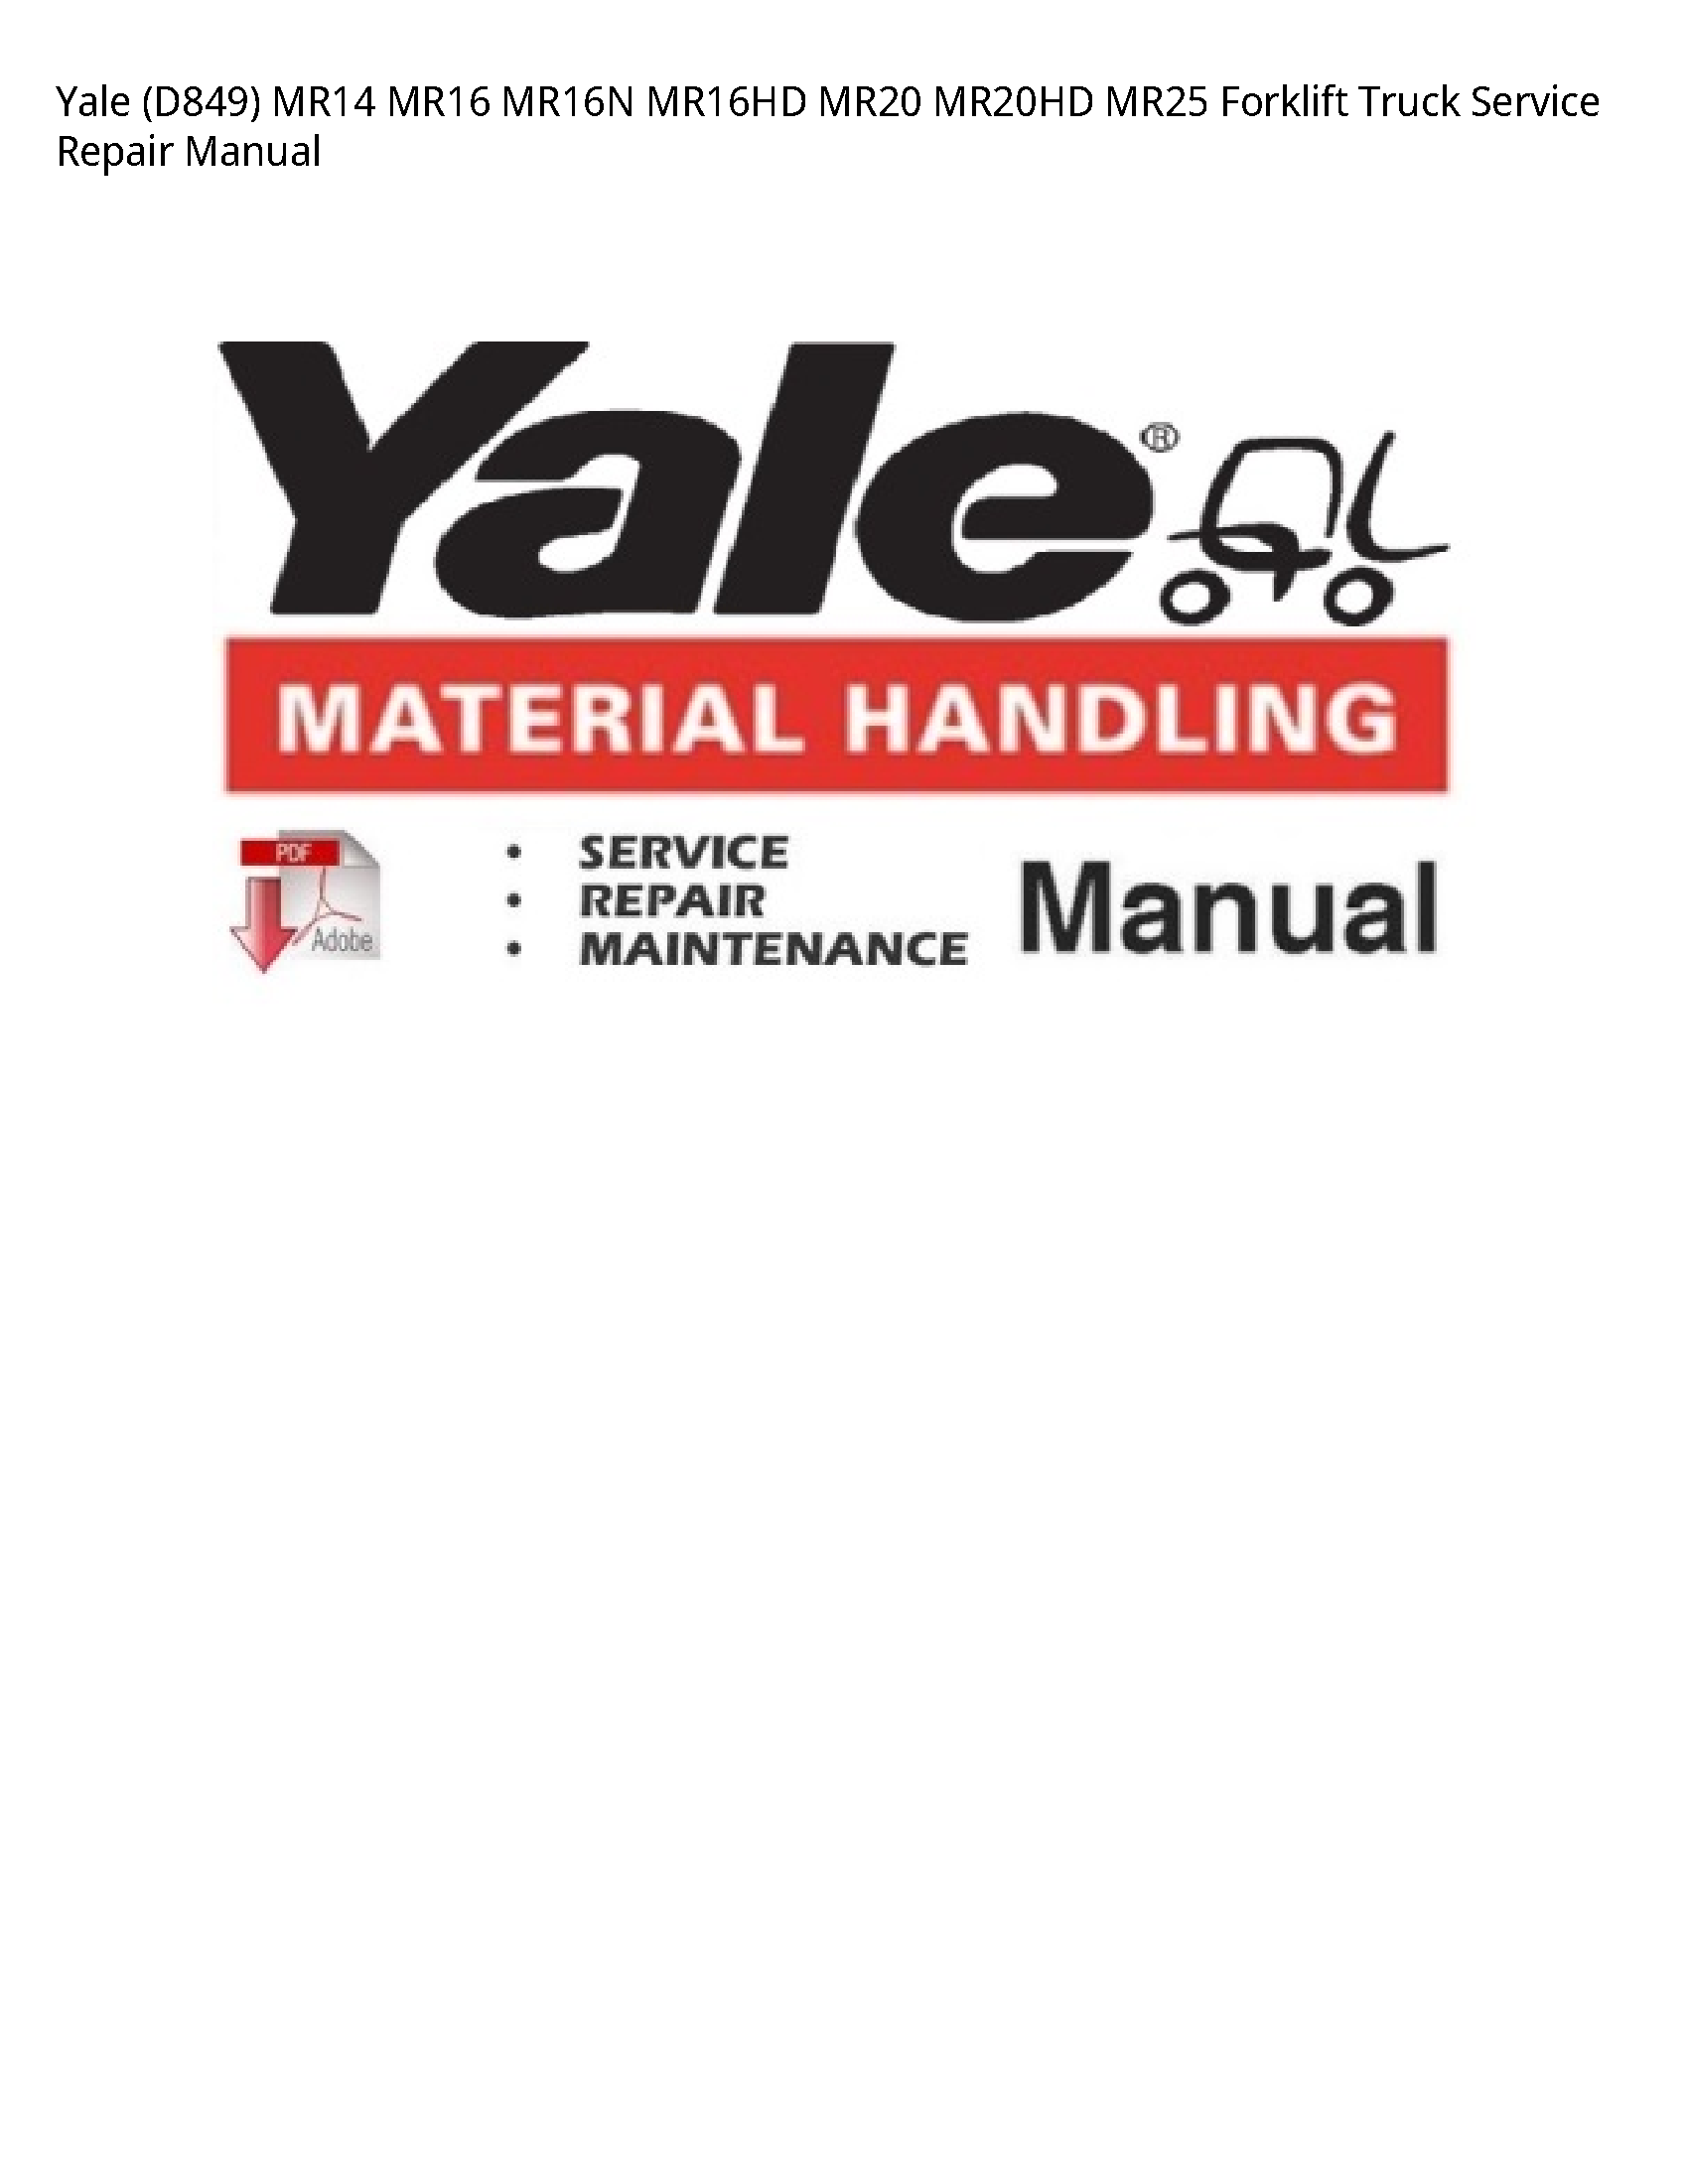 Yale (D849) Forklift Truck manual